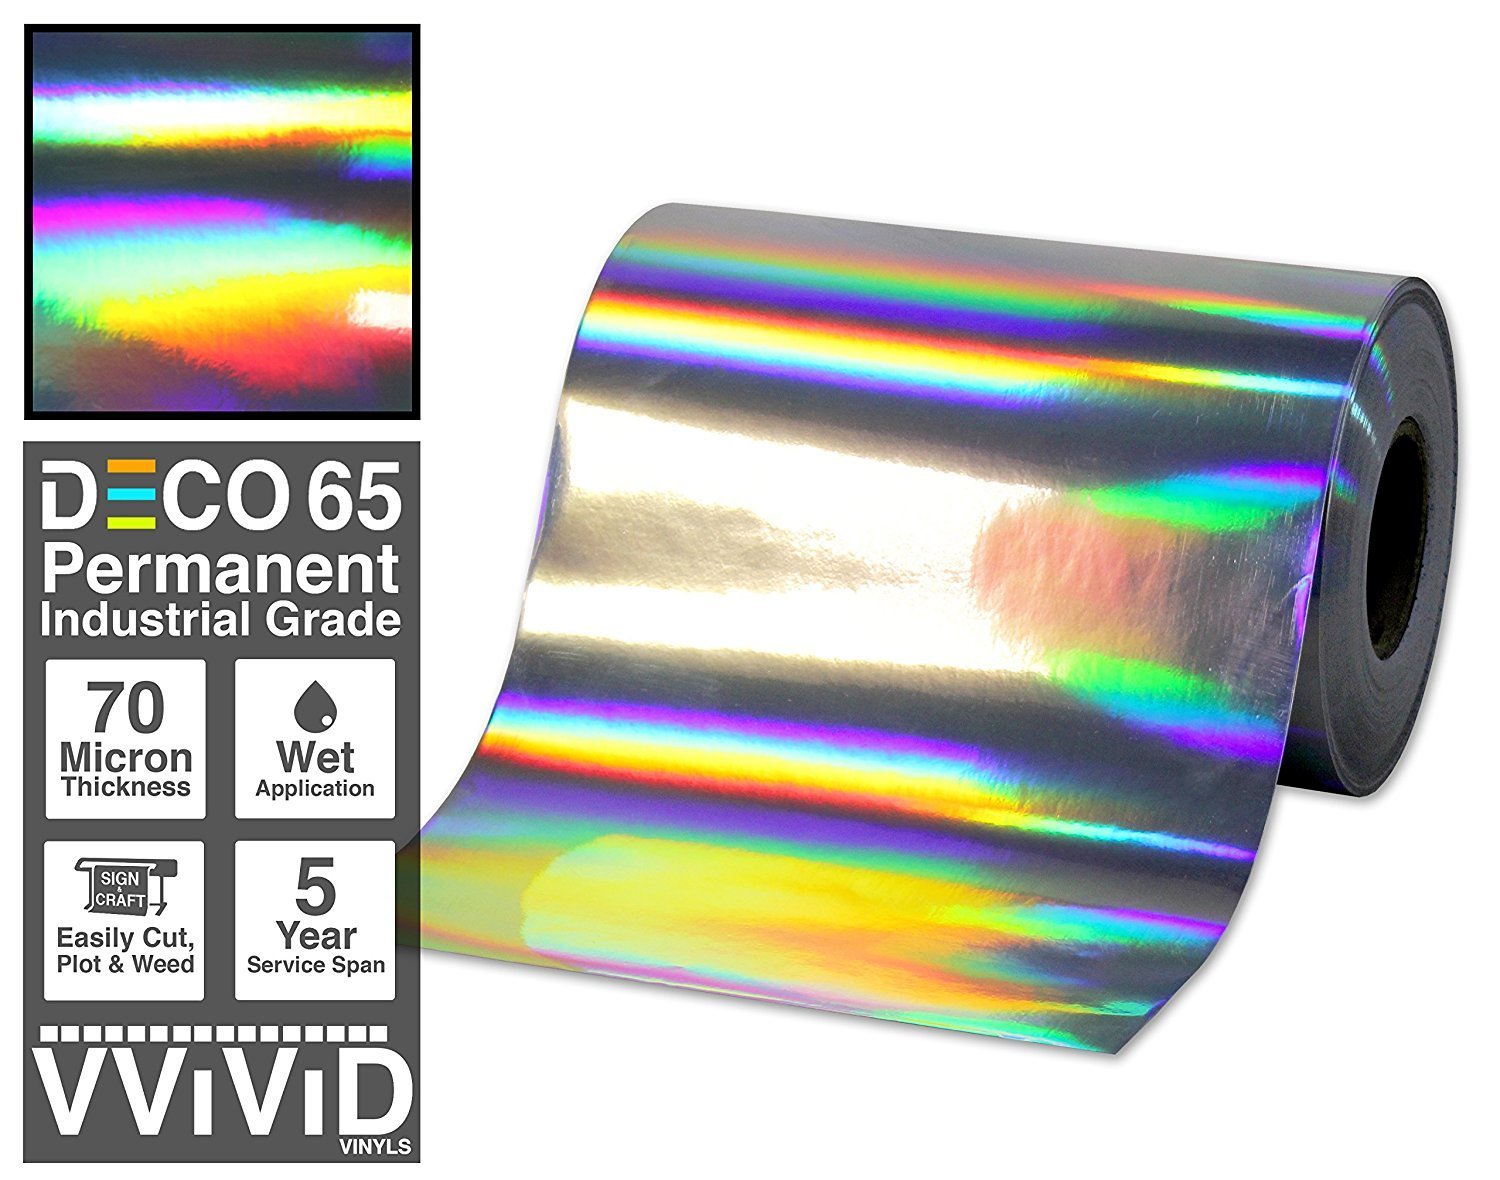 DECO65 Chrome Black Permanent Craft Vinyl Film, VViViD Vinyl